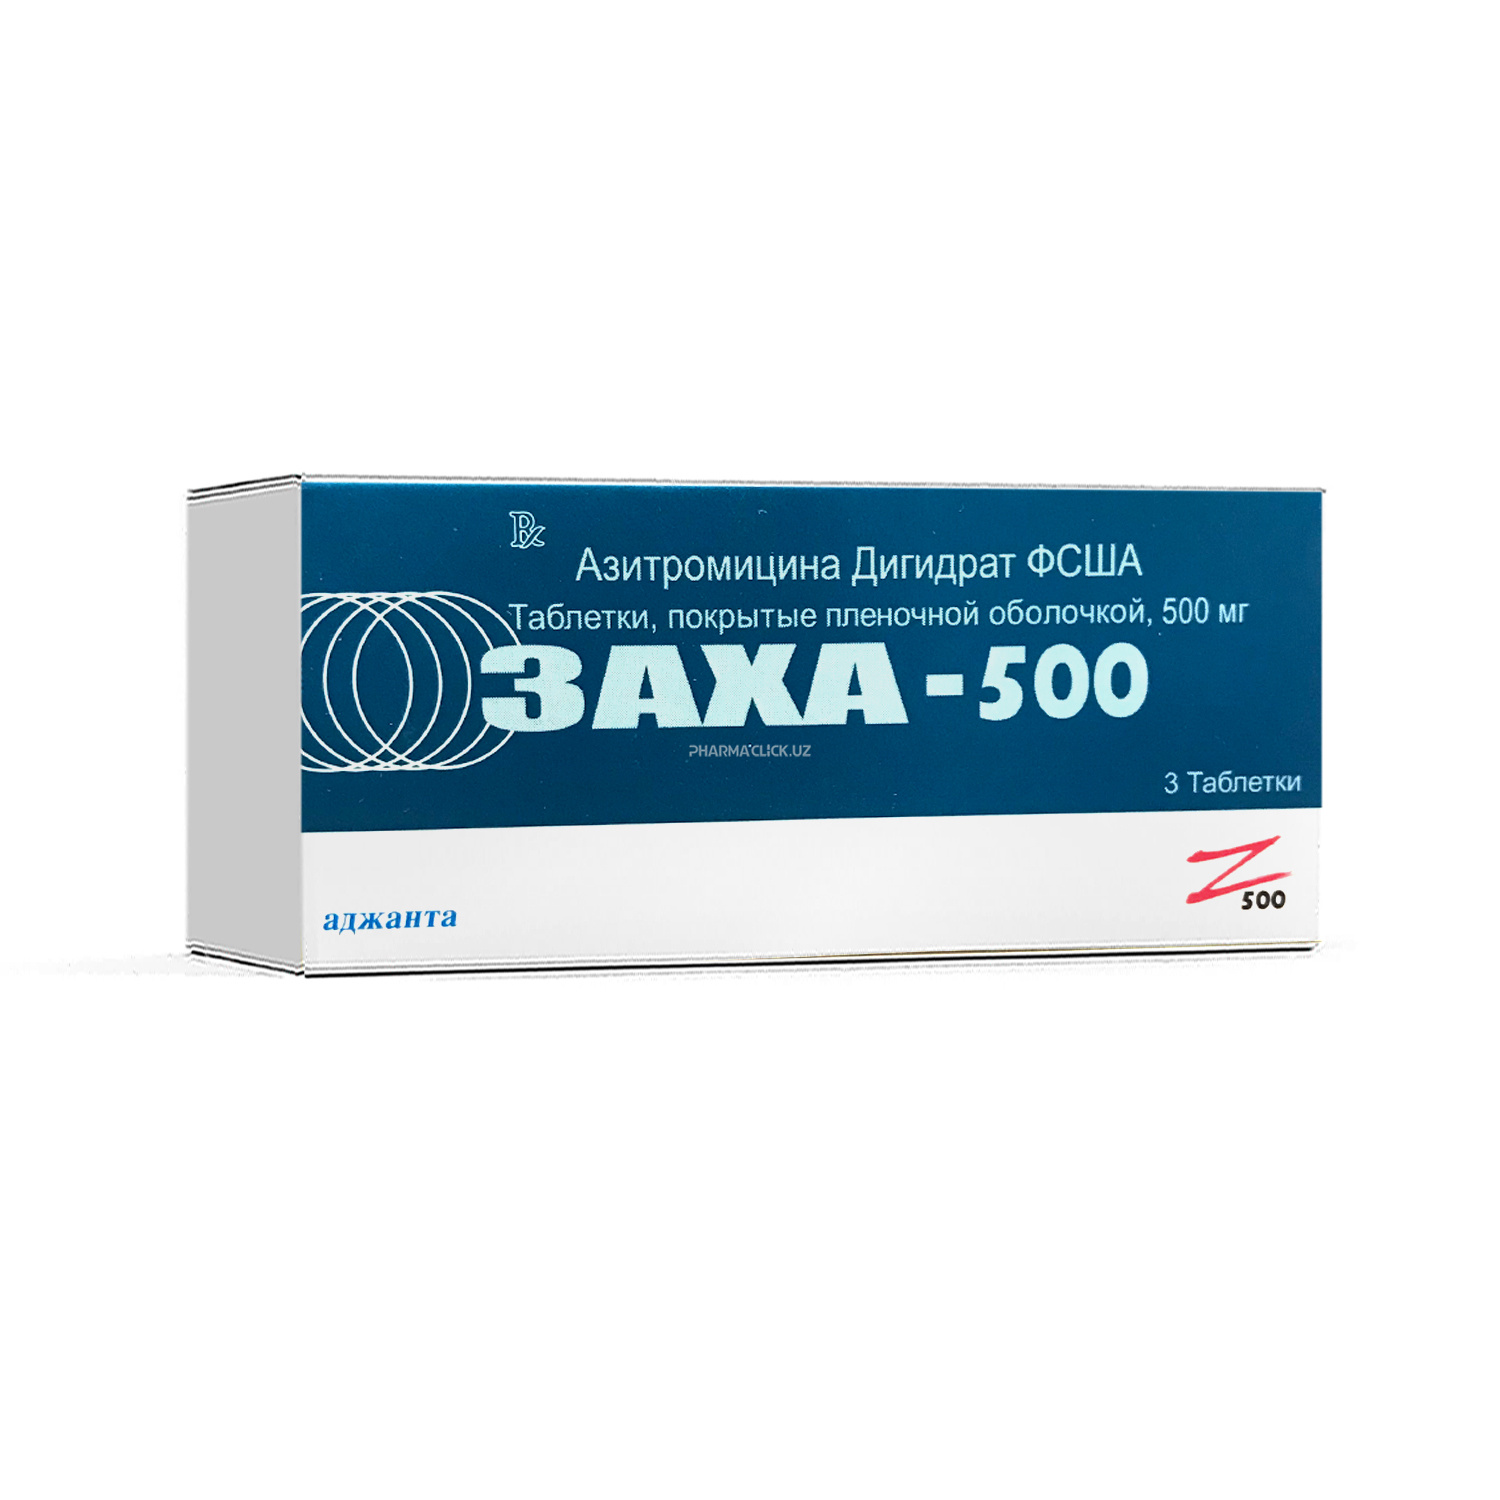 Заха-500 (азитромицин) табл. 500мг №3